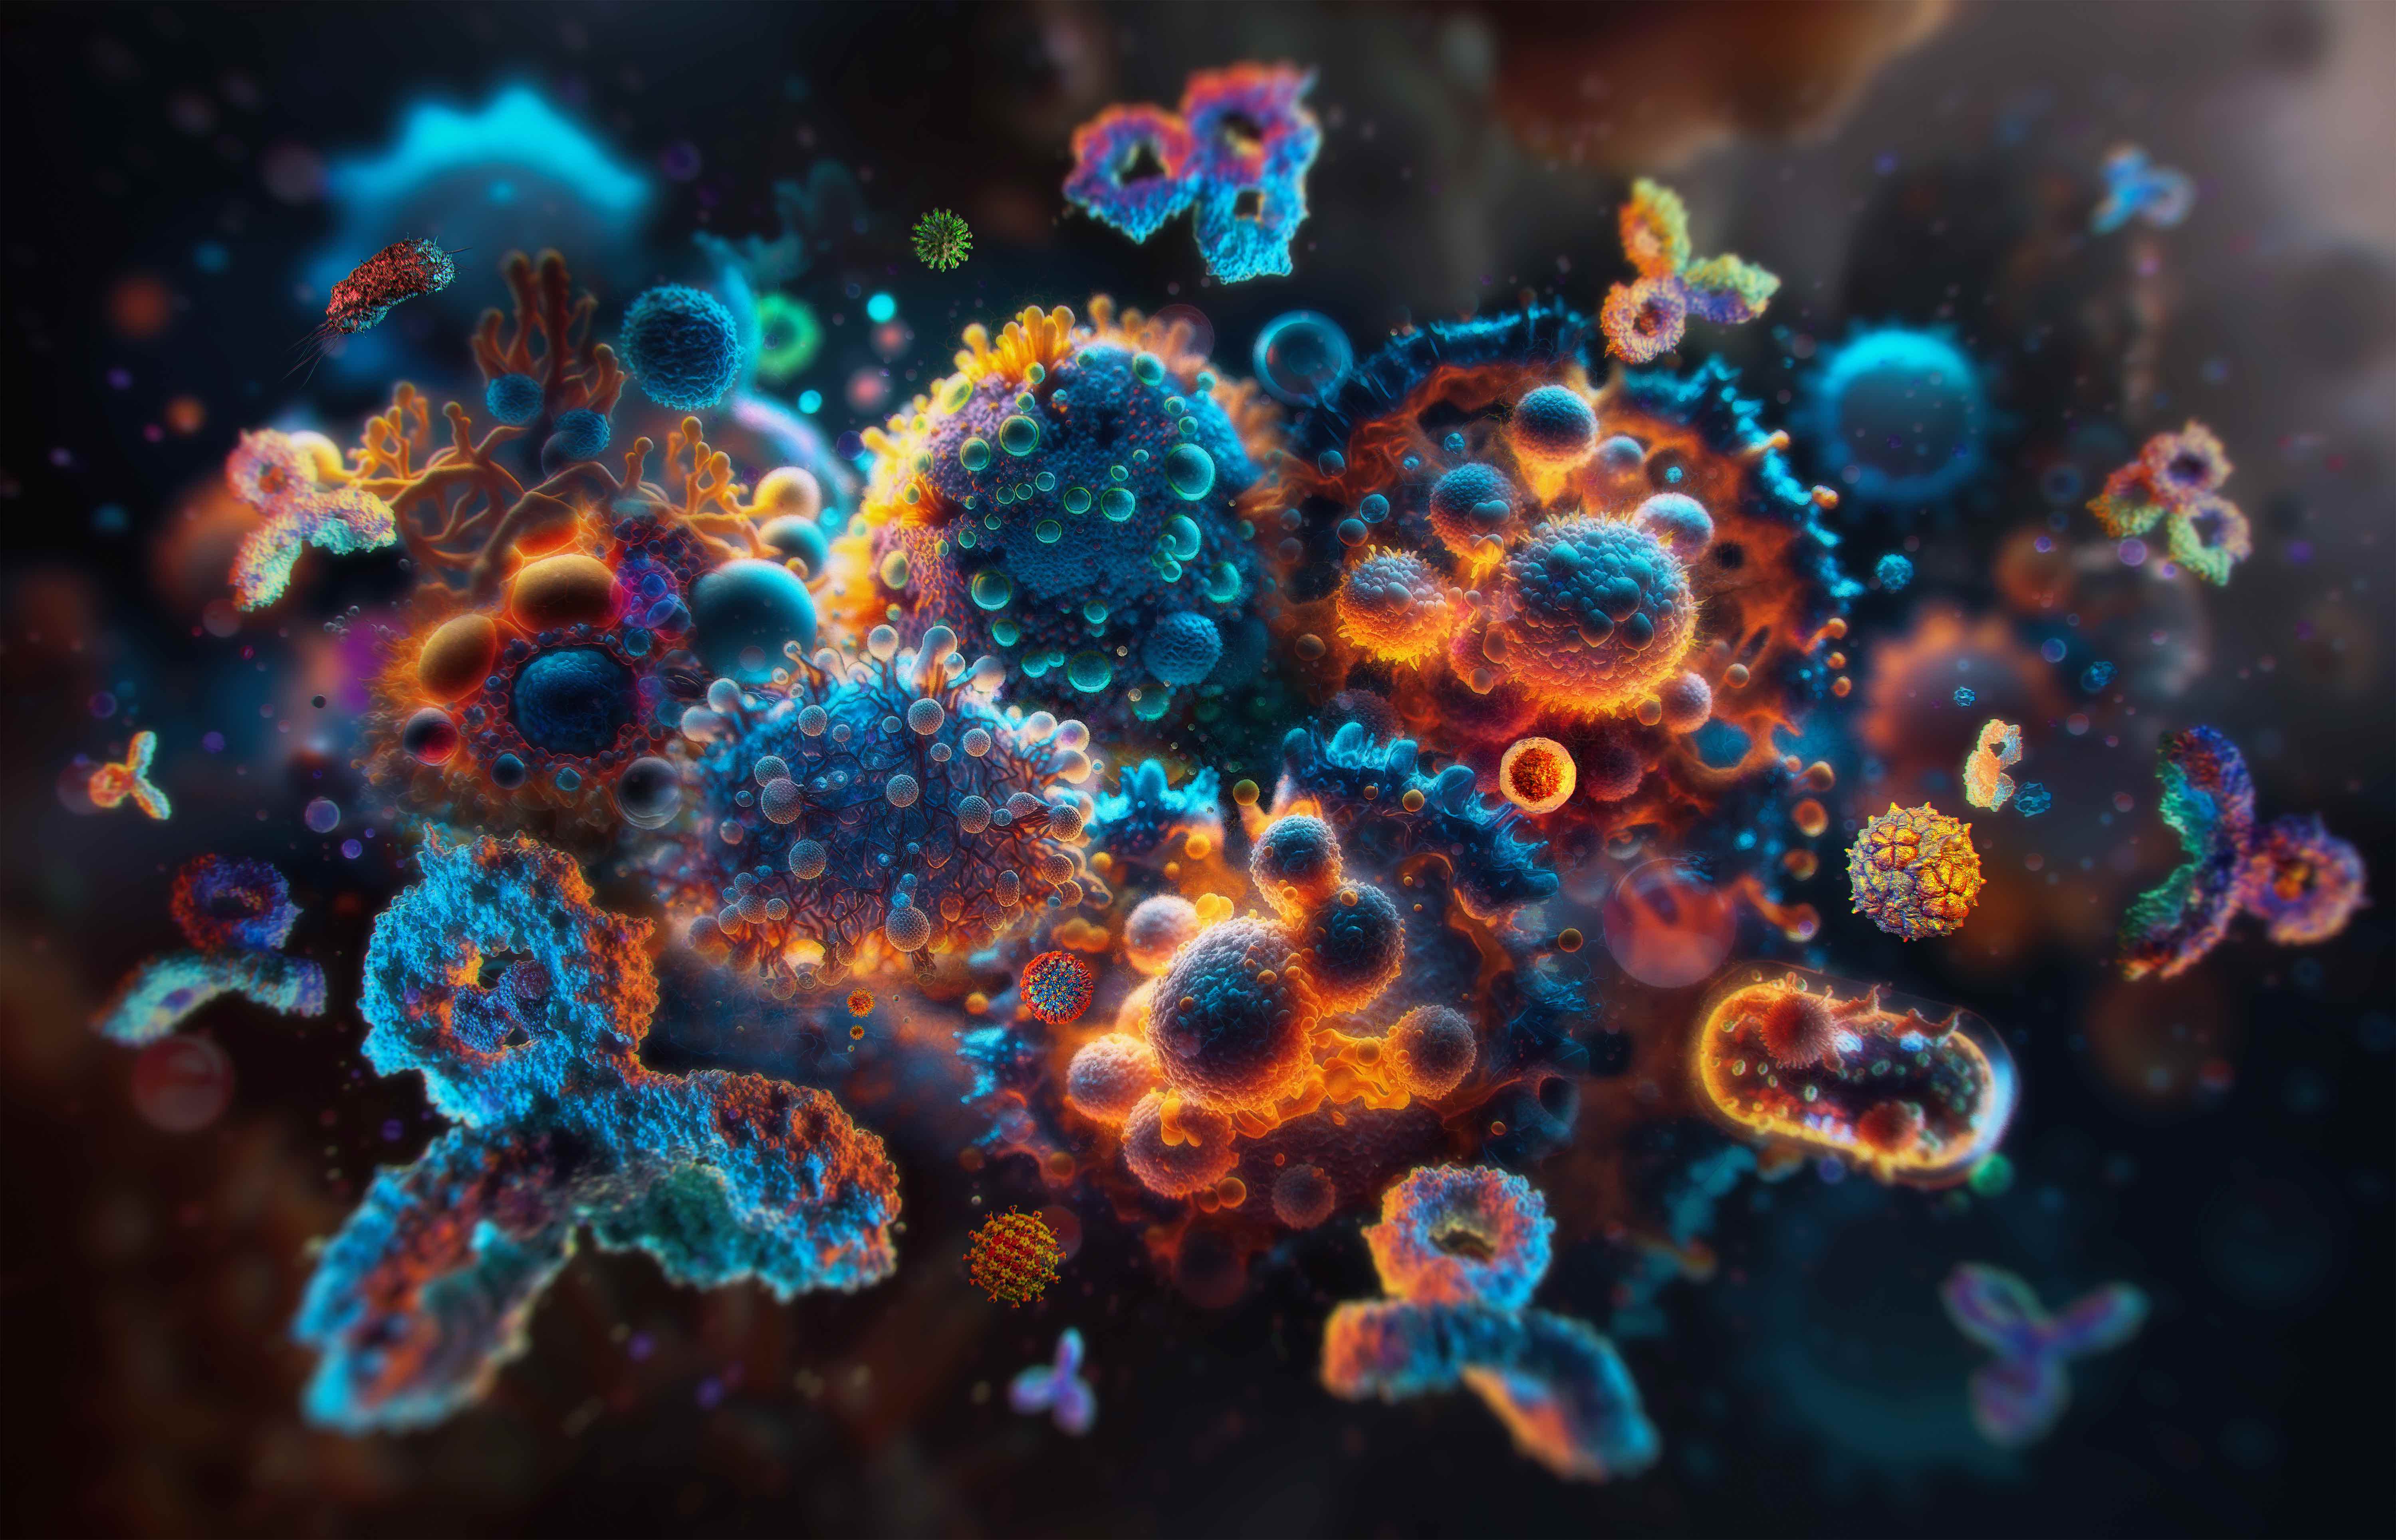 Des anticorps attaquant un virus. © Corona Borealis